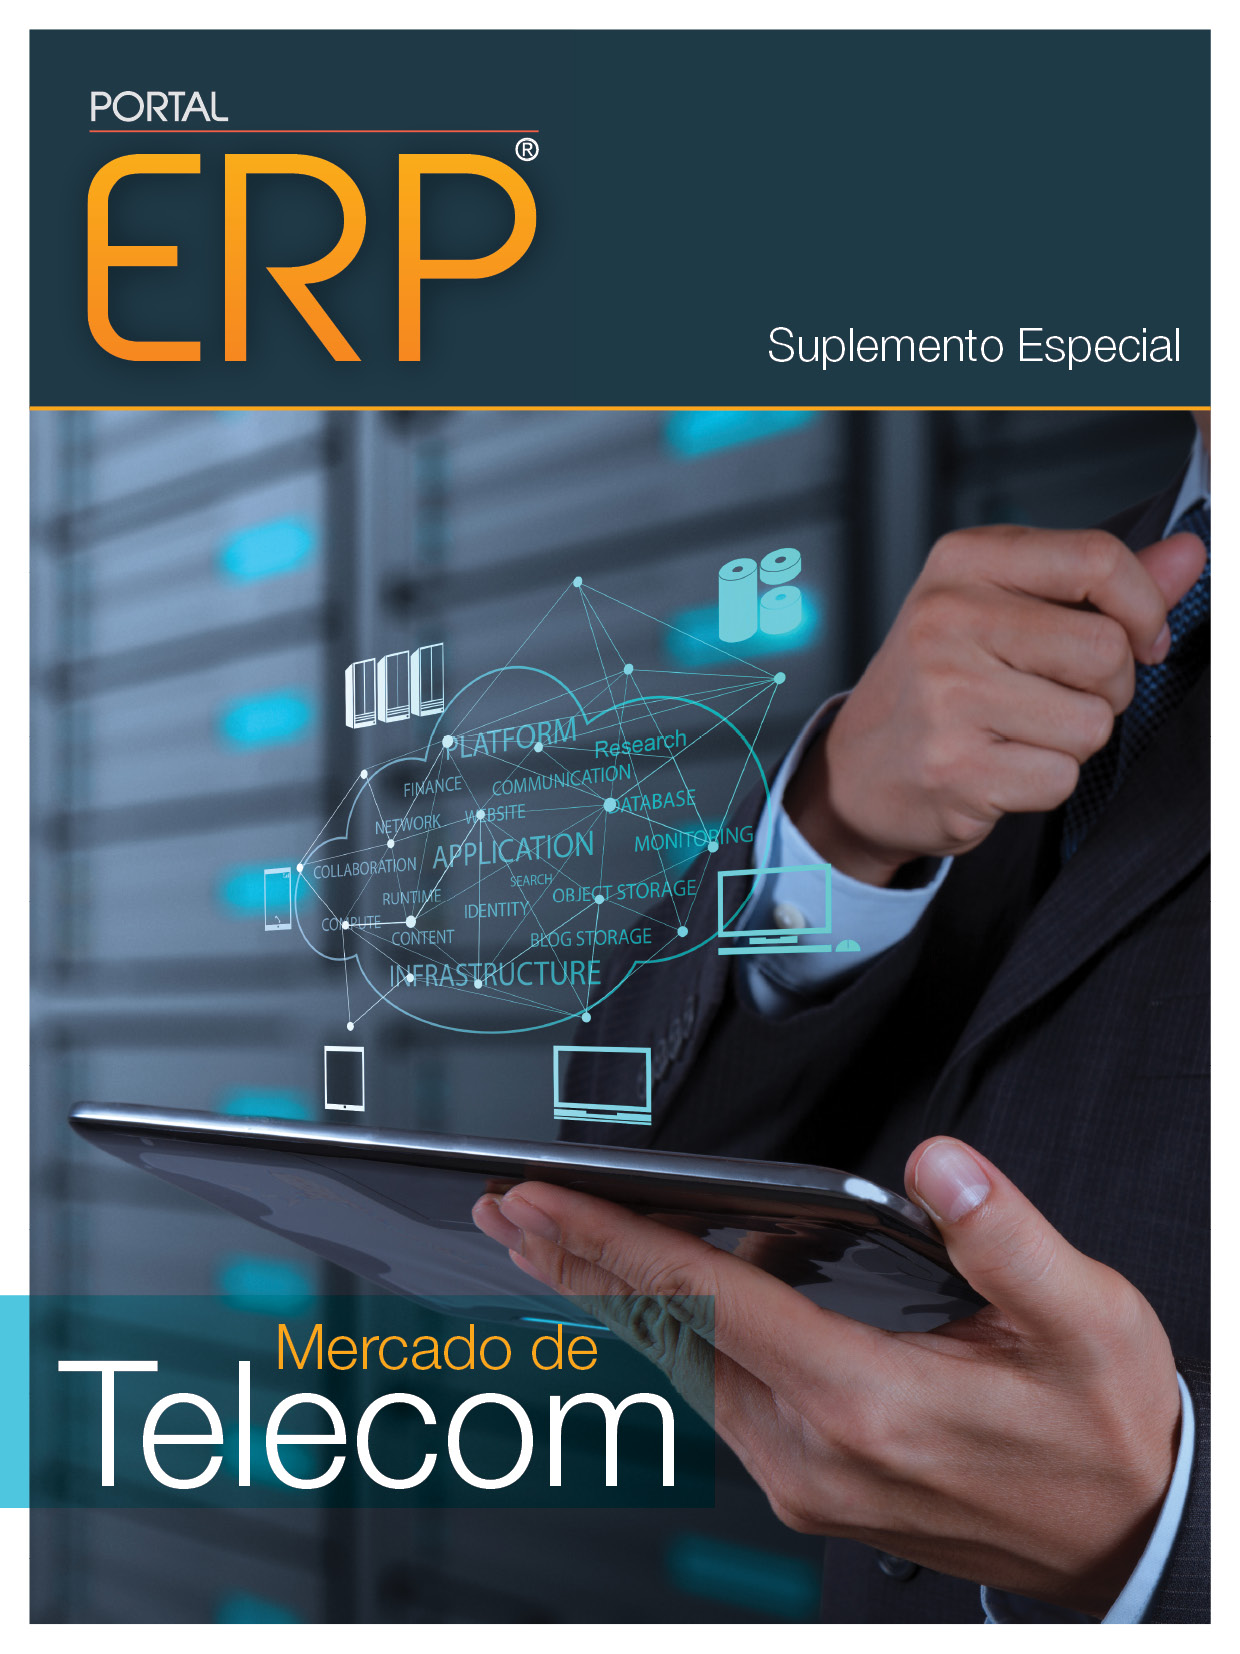 Portal ERP Telecom